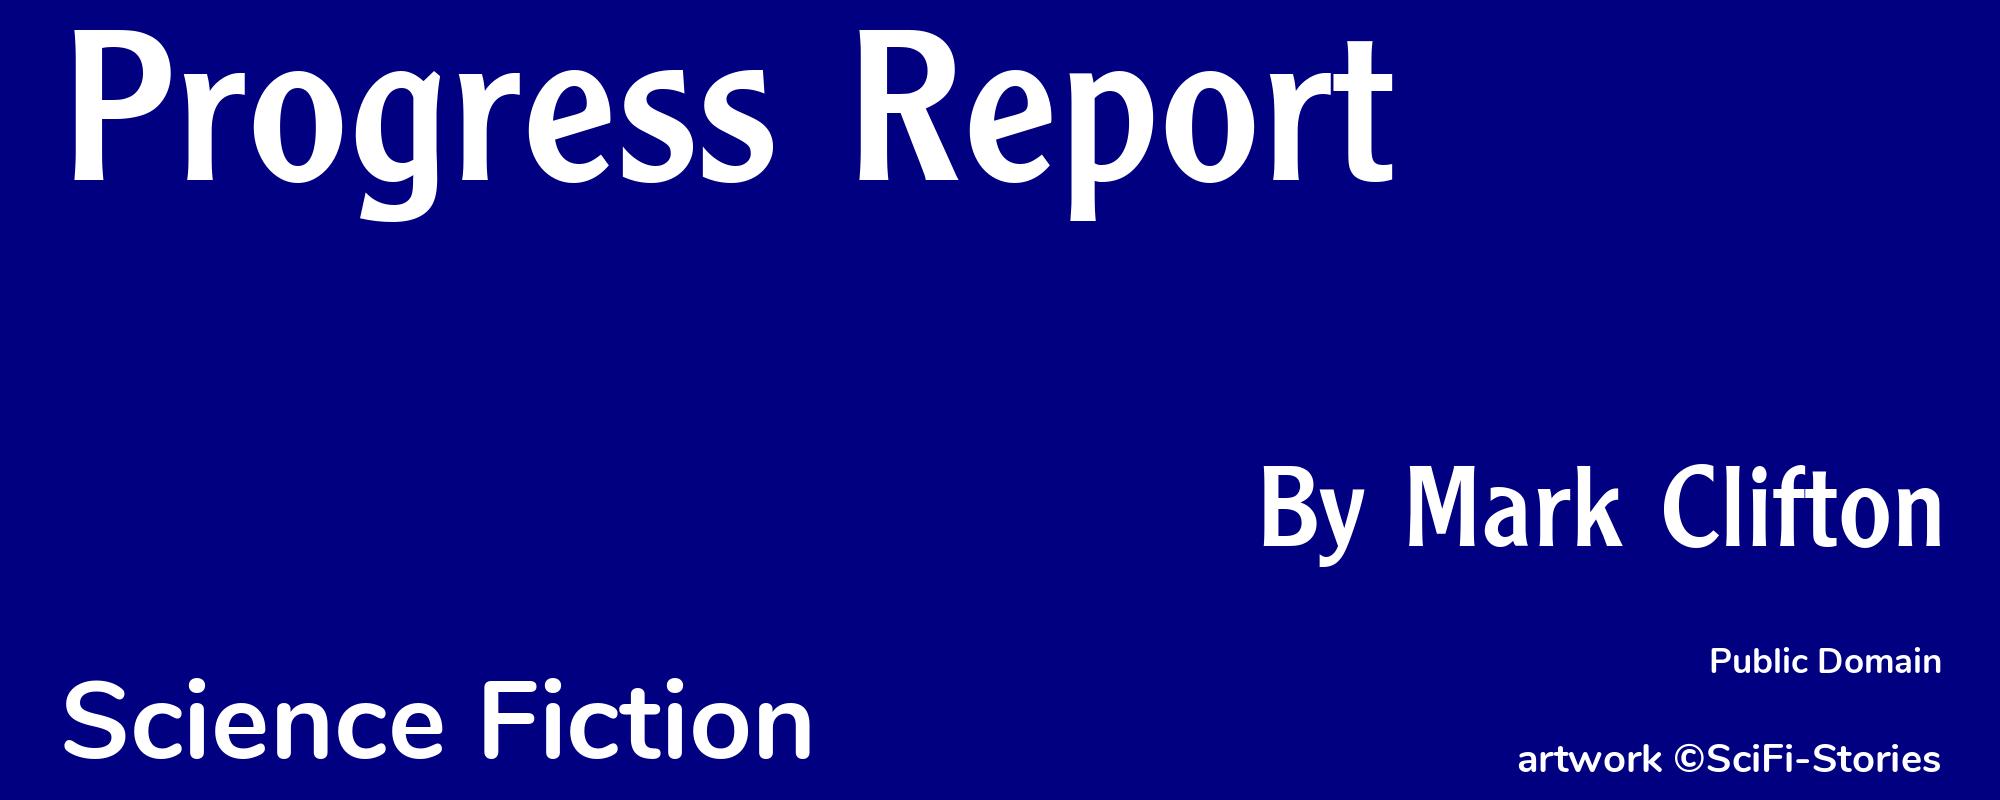 Progress Report - Cover